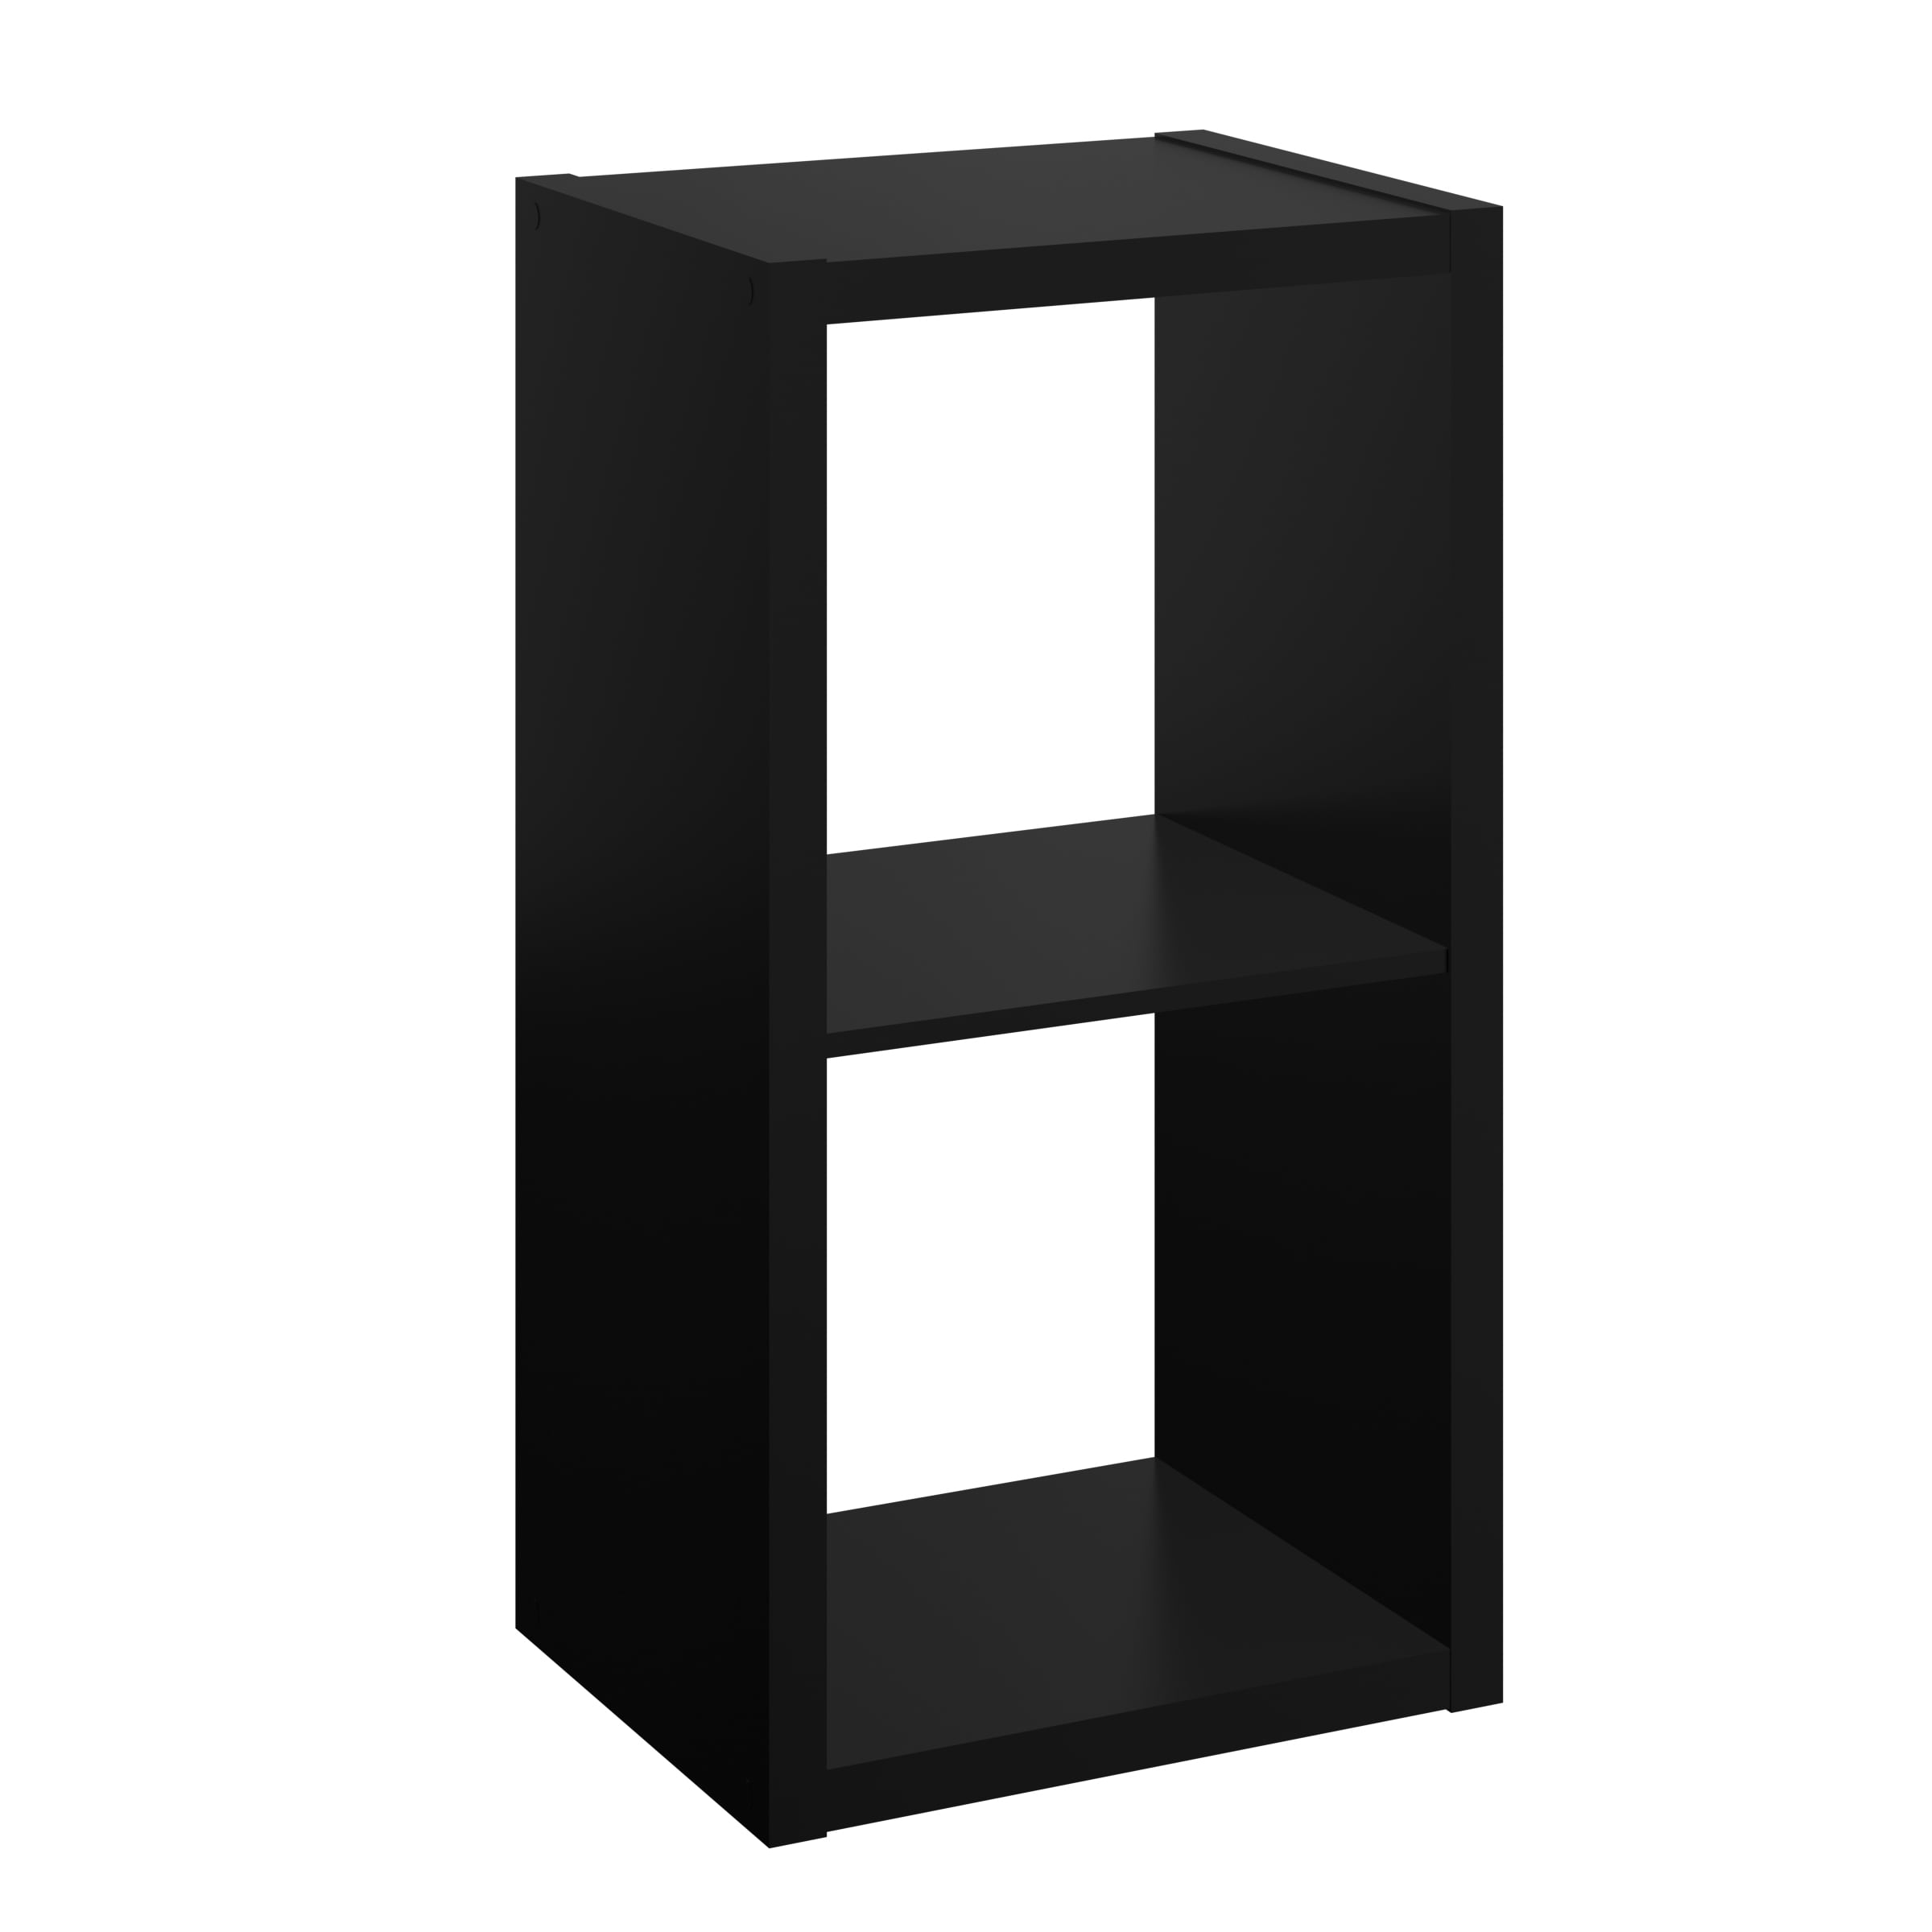 Mainstays Closet Organizer, 2-Tower 9-Shelves, Easy to Assemble, Black